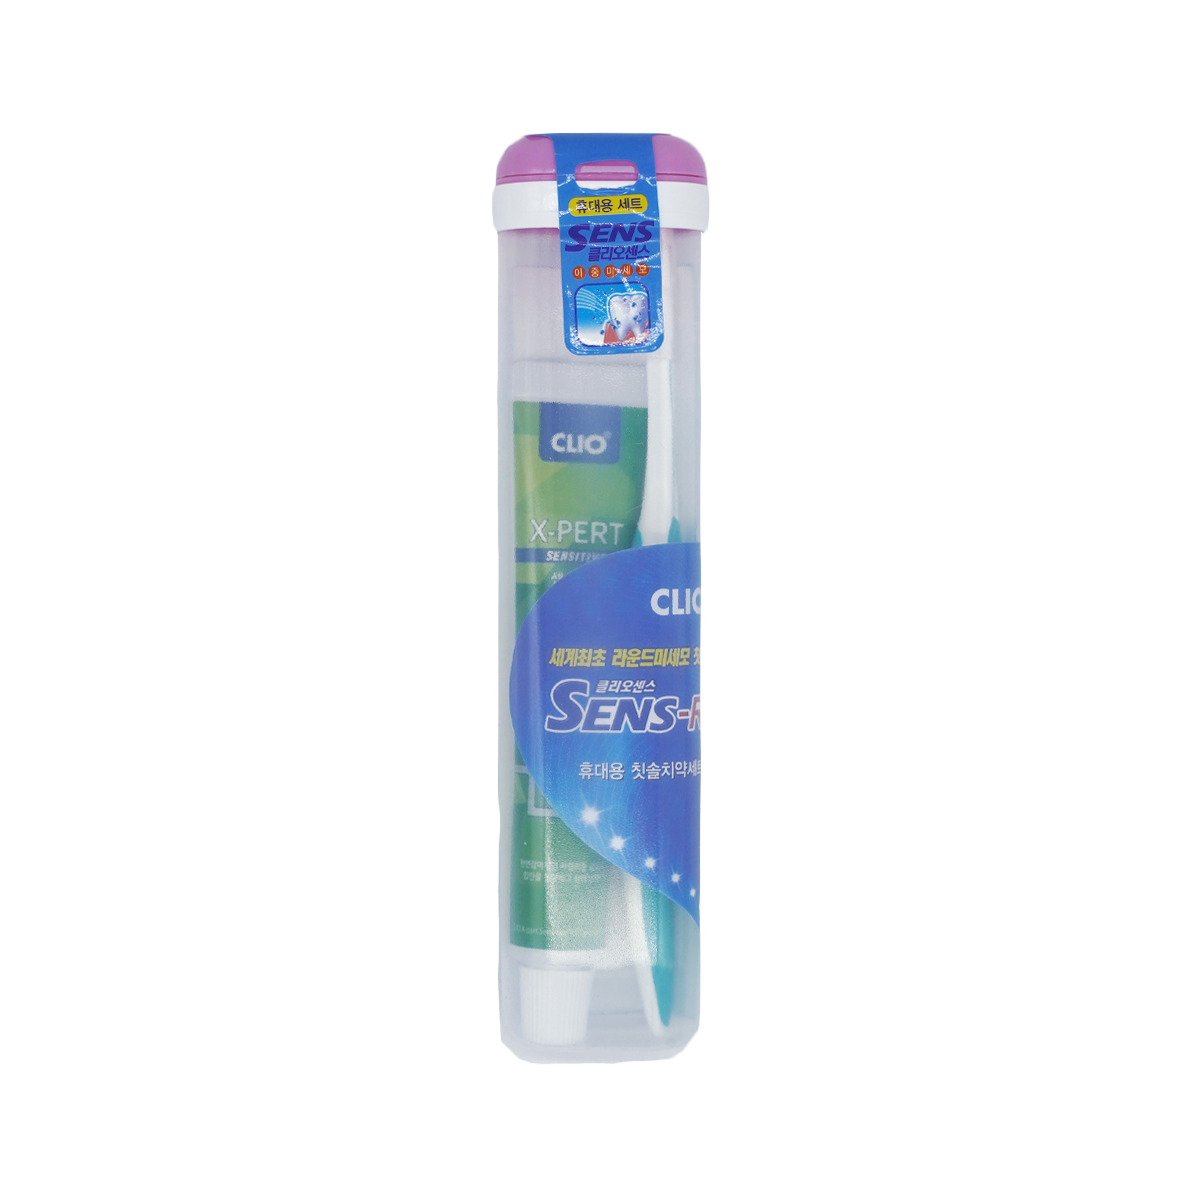 Набор зубная паста + щетка CLIO New Portable Sense R + Expert Toothpaste camping battery powered portable 55 liter cosmetics boba frigidaire mini refrigerator freezer 12 volt 220v